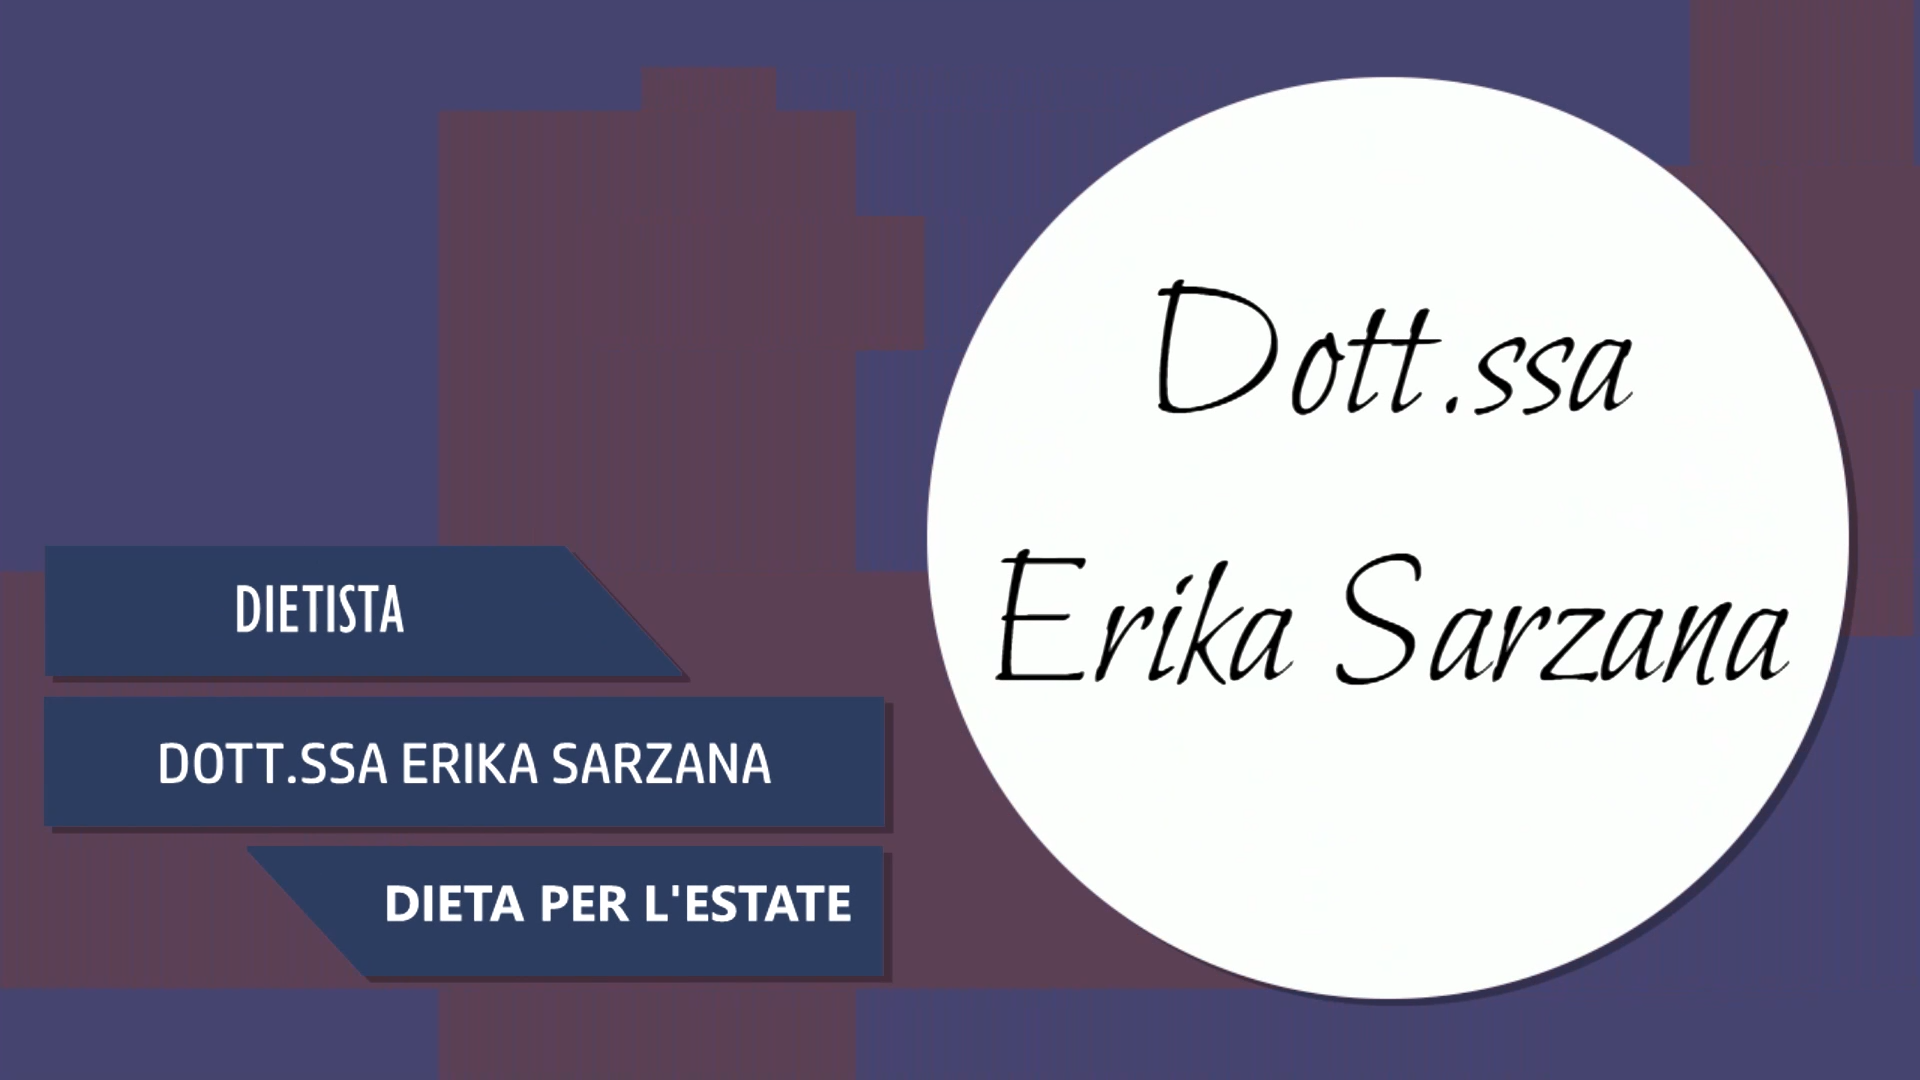 Intervista alla Dott.ssa Erika Sarzana – Dieta per l’estate